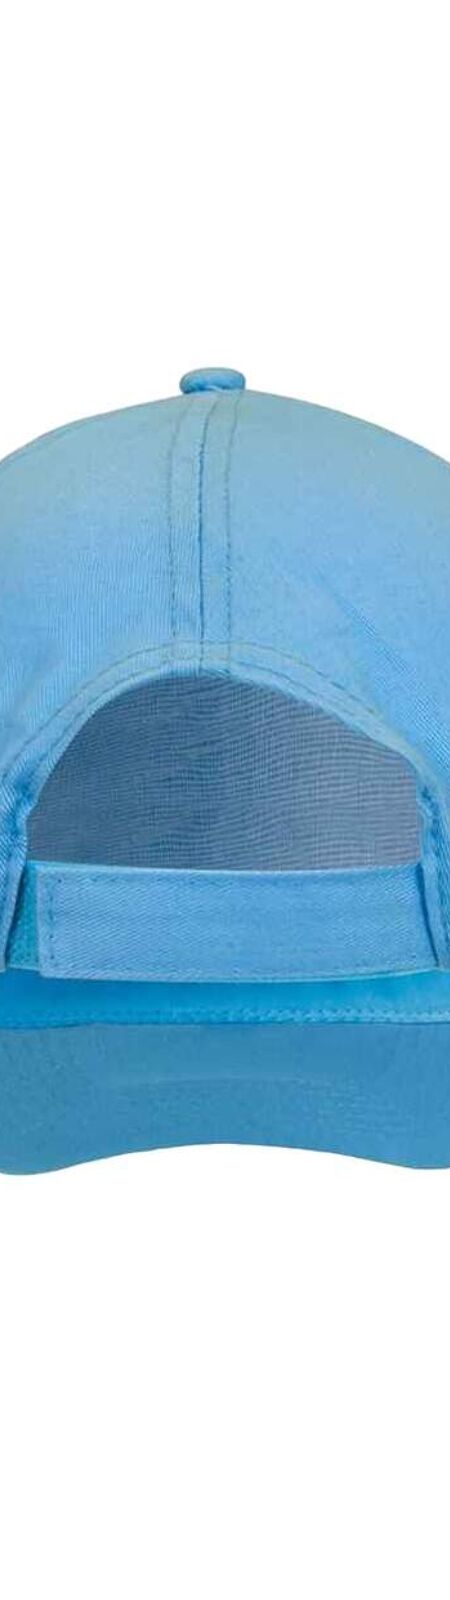 Result Headwear - Casquette de baseball - Adulte (Bleu ciel) - UTPC6574